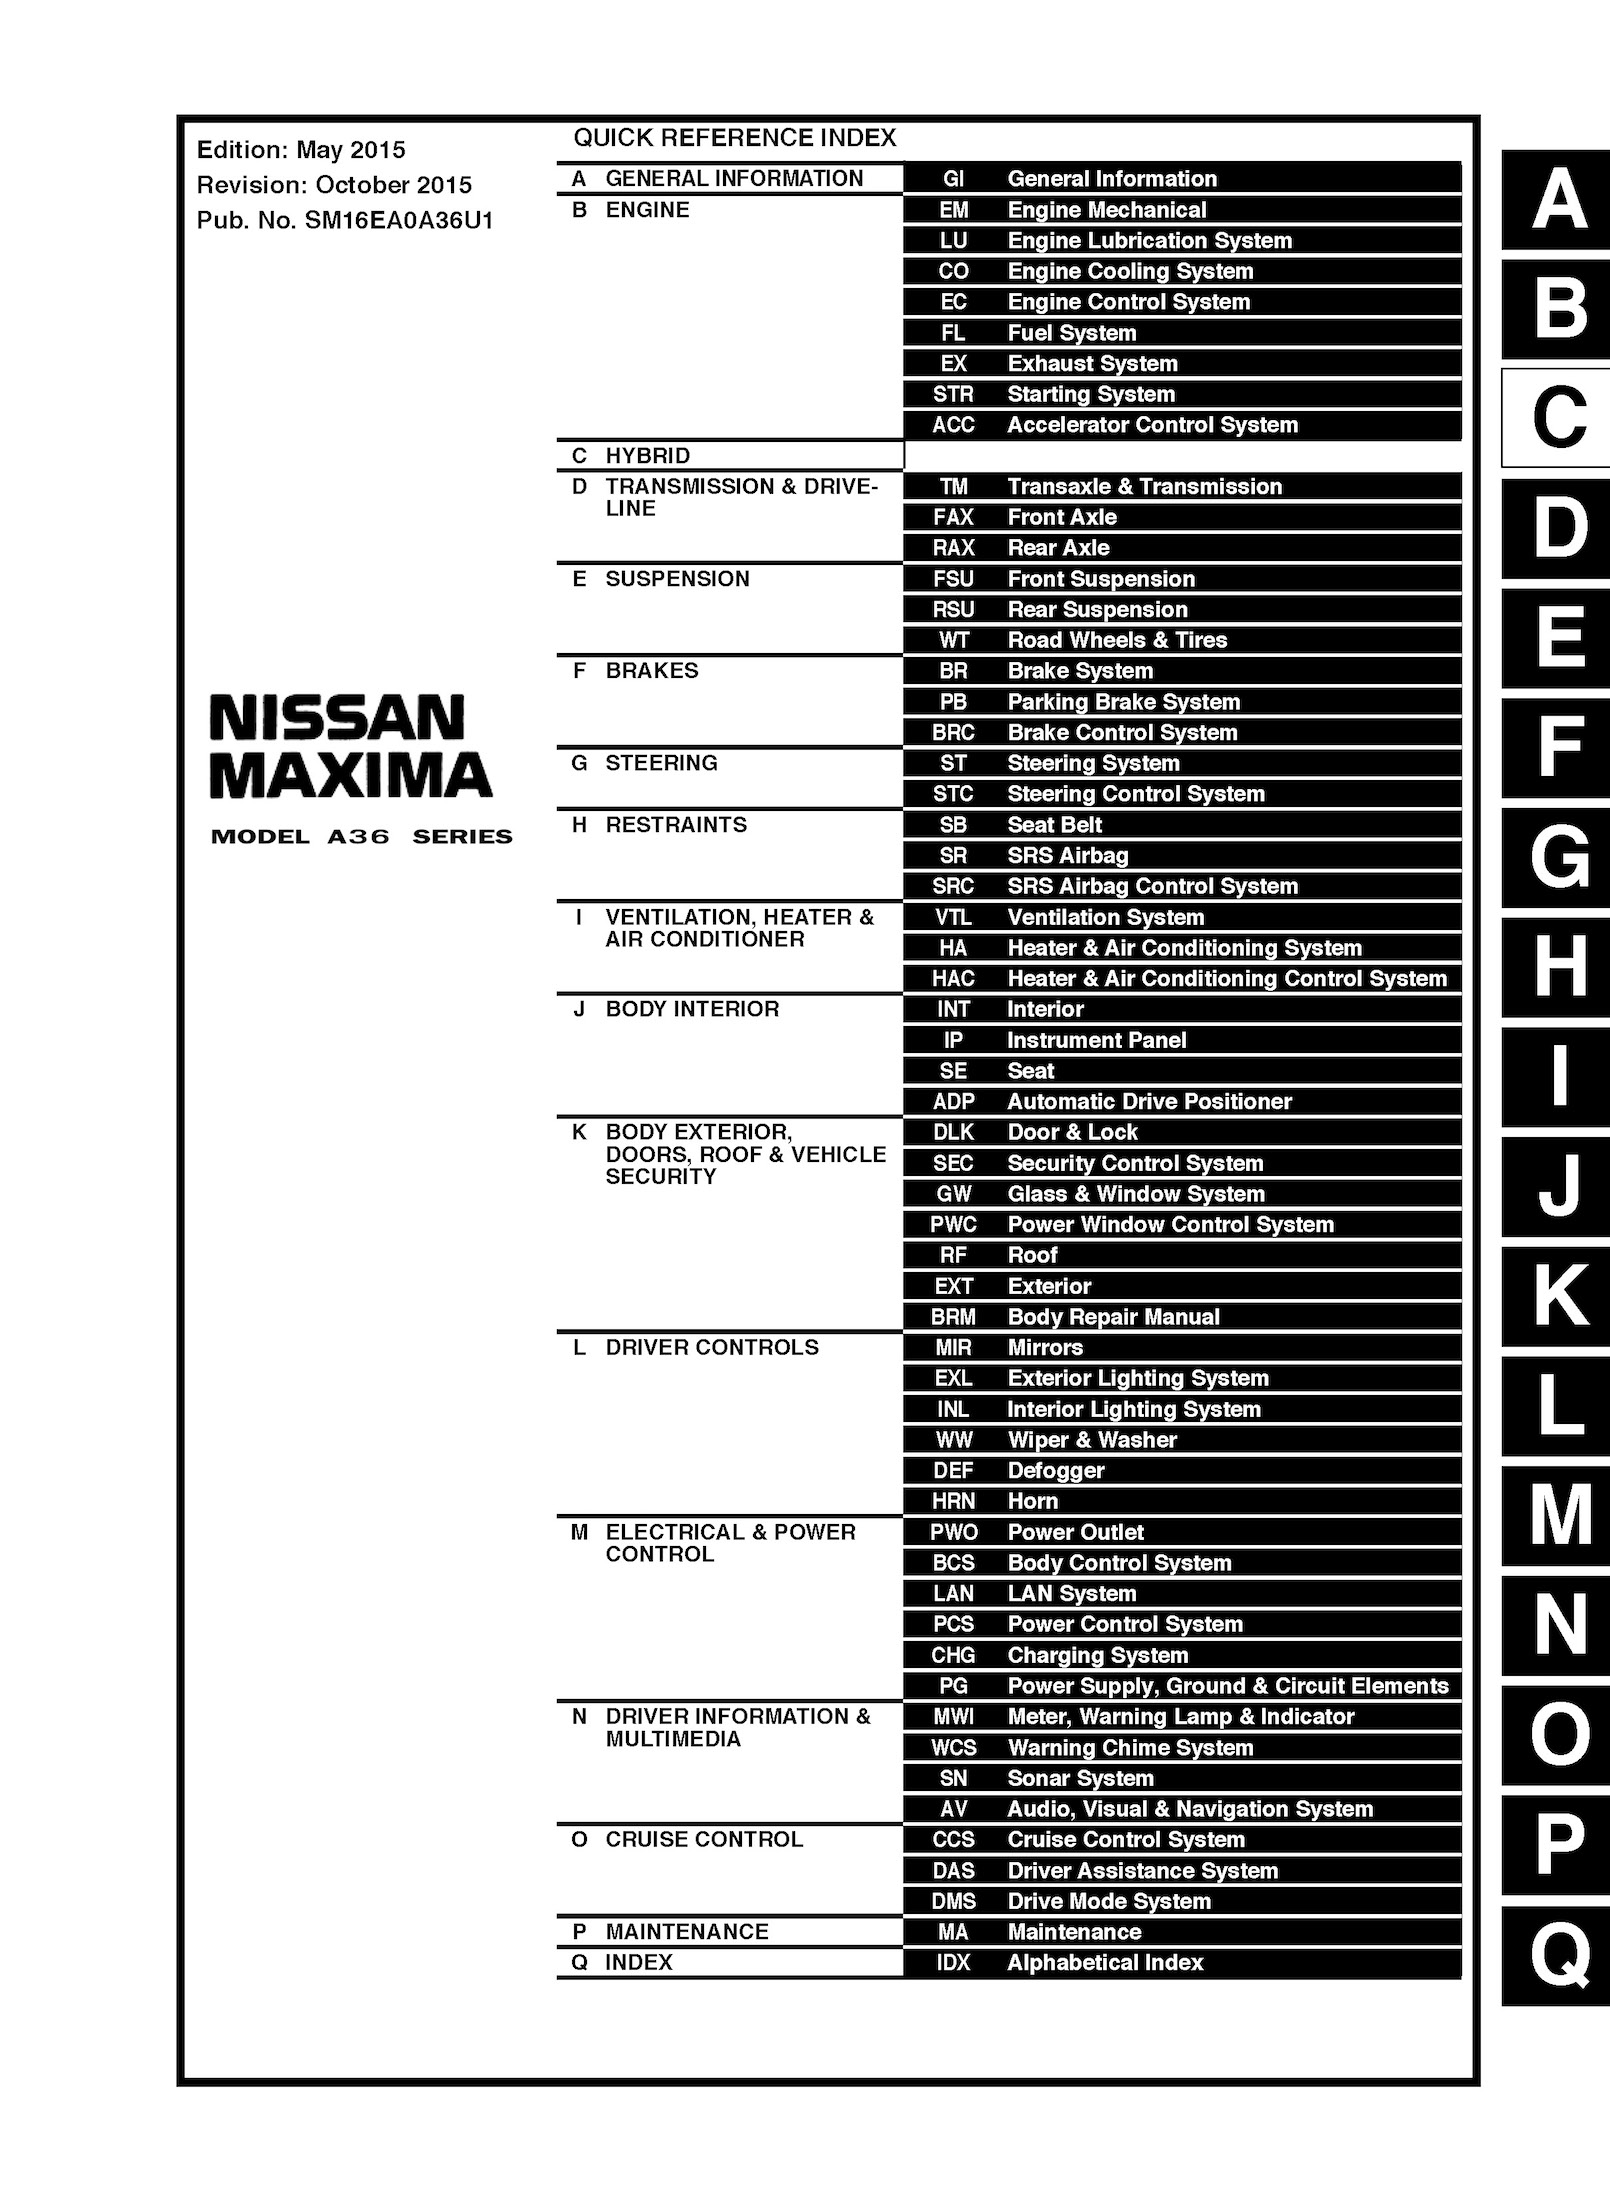 Table of Contents 2016 Nissan Maxima Repair Manual